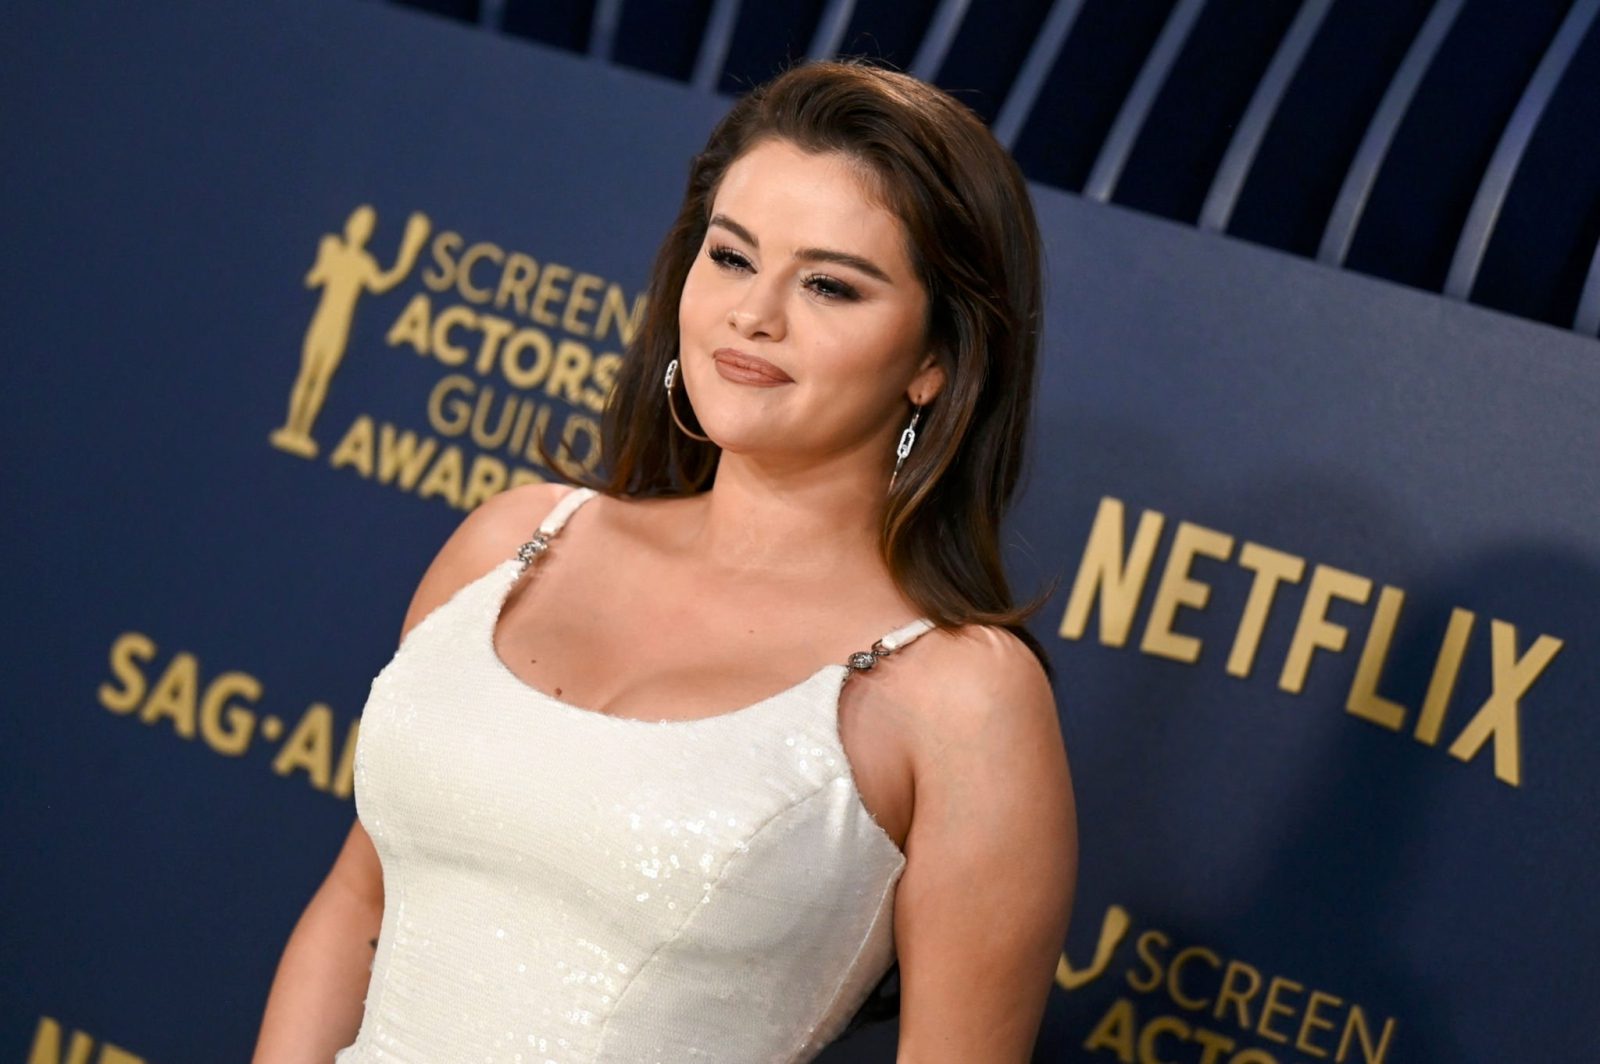 Selena Gomez White Dress Big Breasts Cleavage Sag Awards - Hot